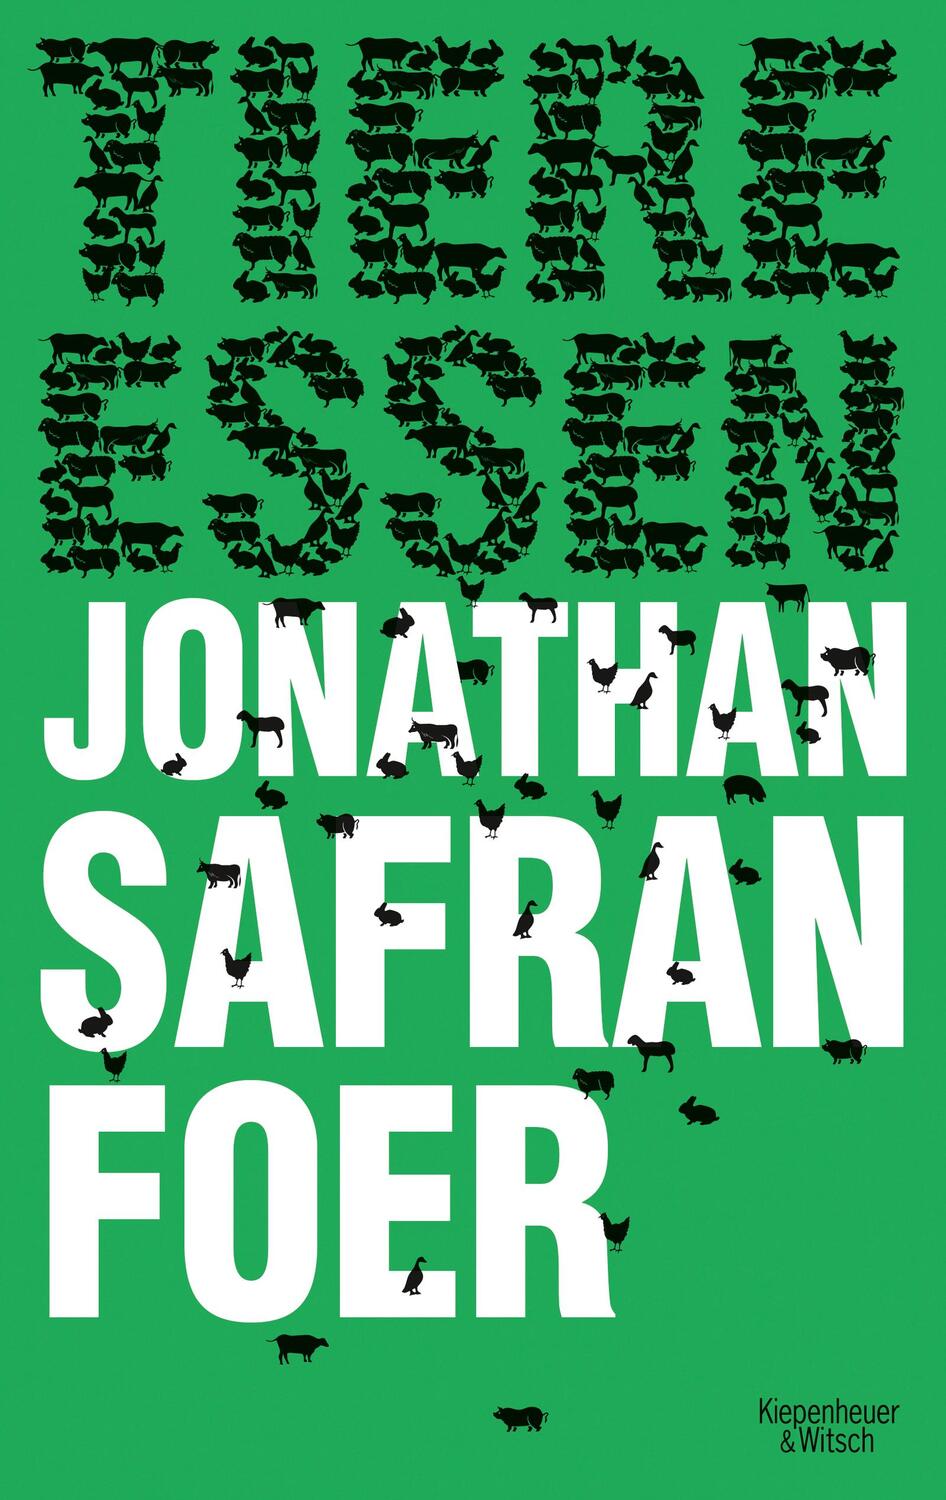 Tiere Essen - Foer, Jonathan Safran